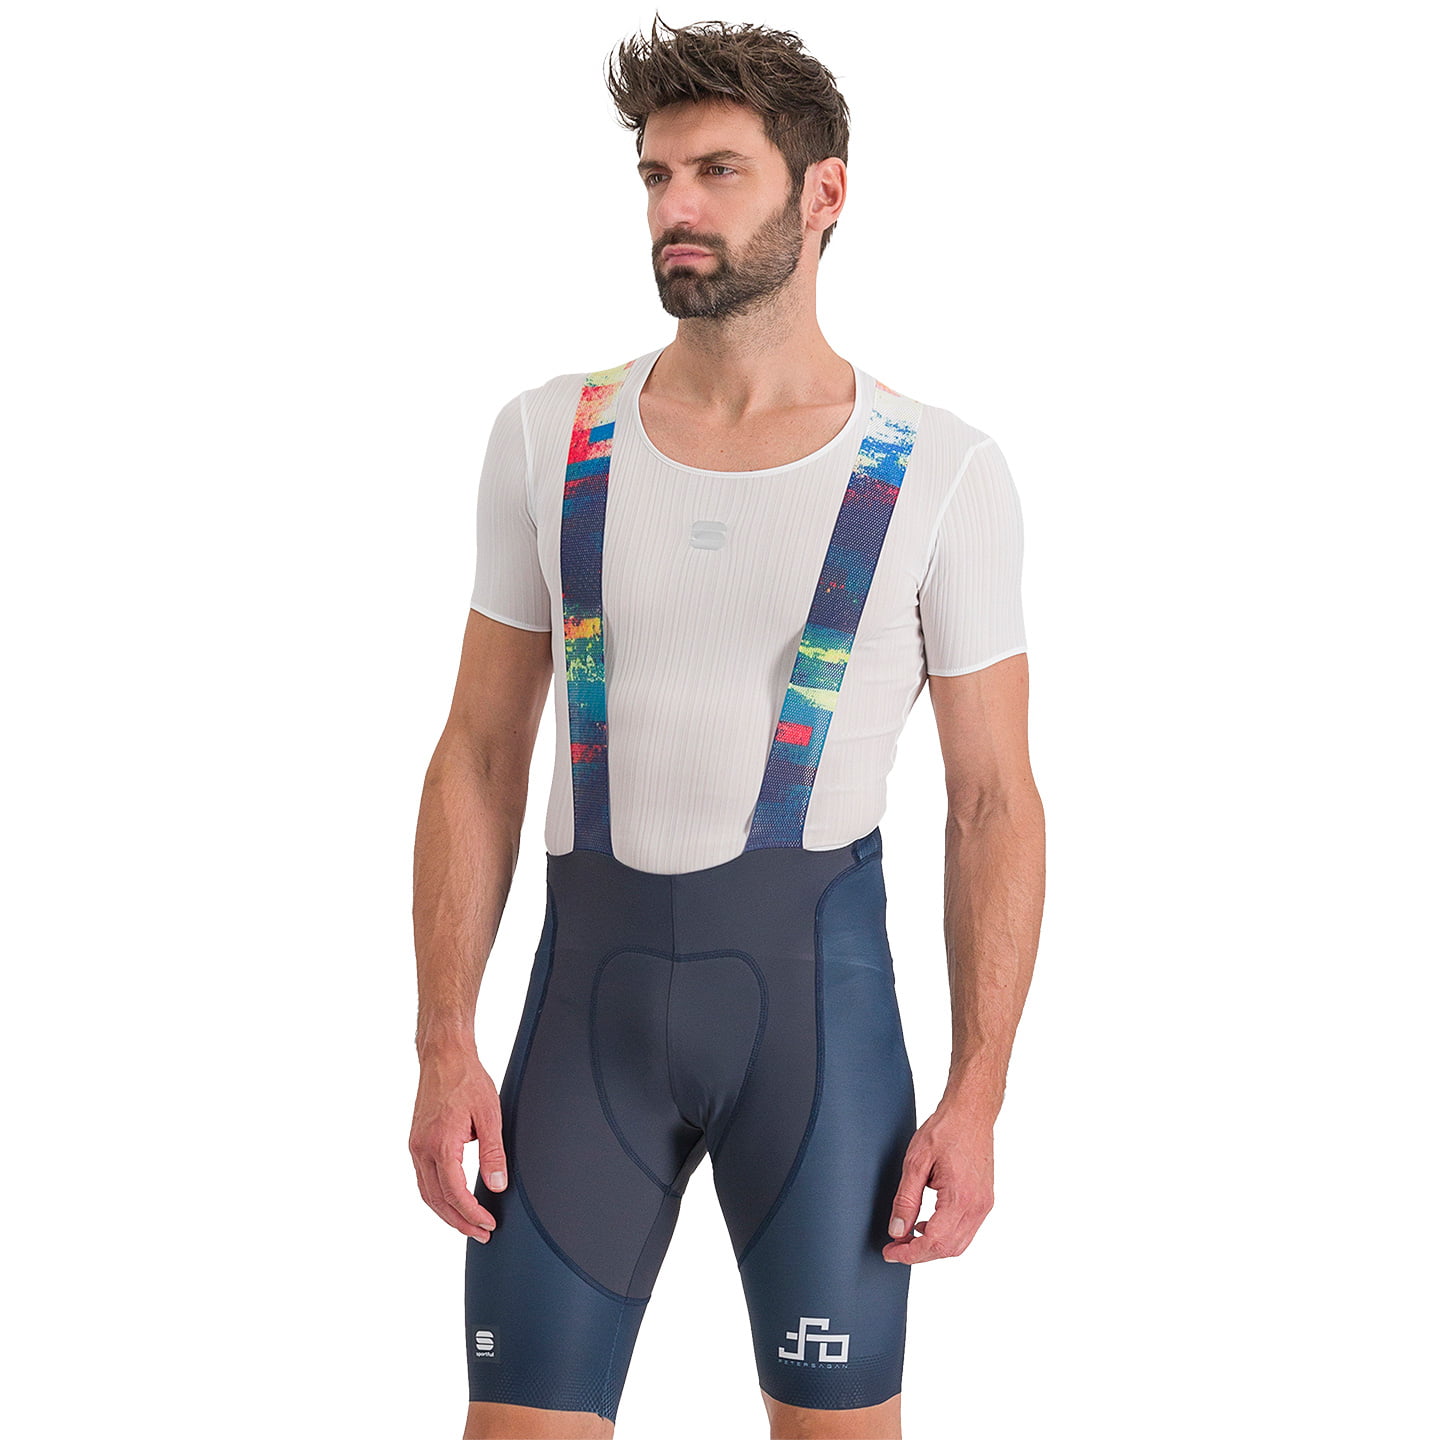 SPORTFUL Classic Peter Sagan Line Bib Shorts Bib Shorts, for men, size S, Cycle shorts, Cycling clothing